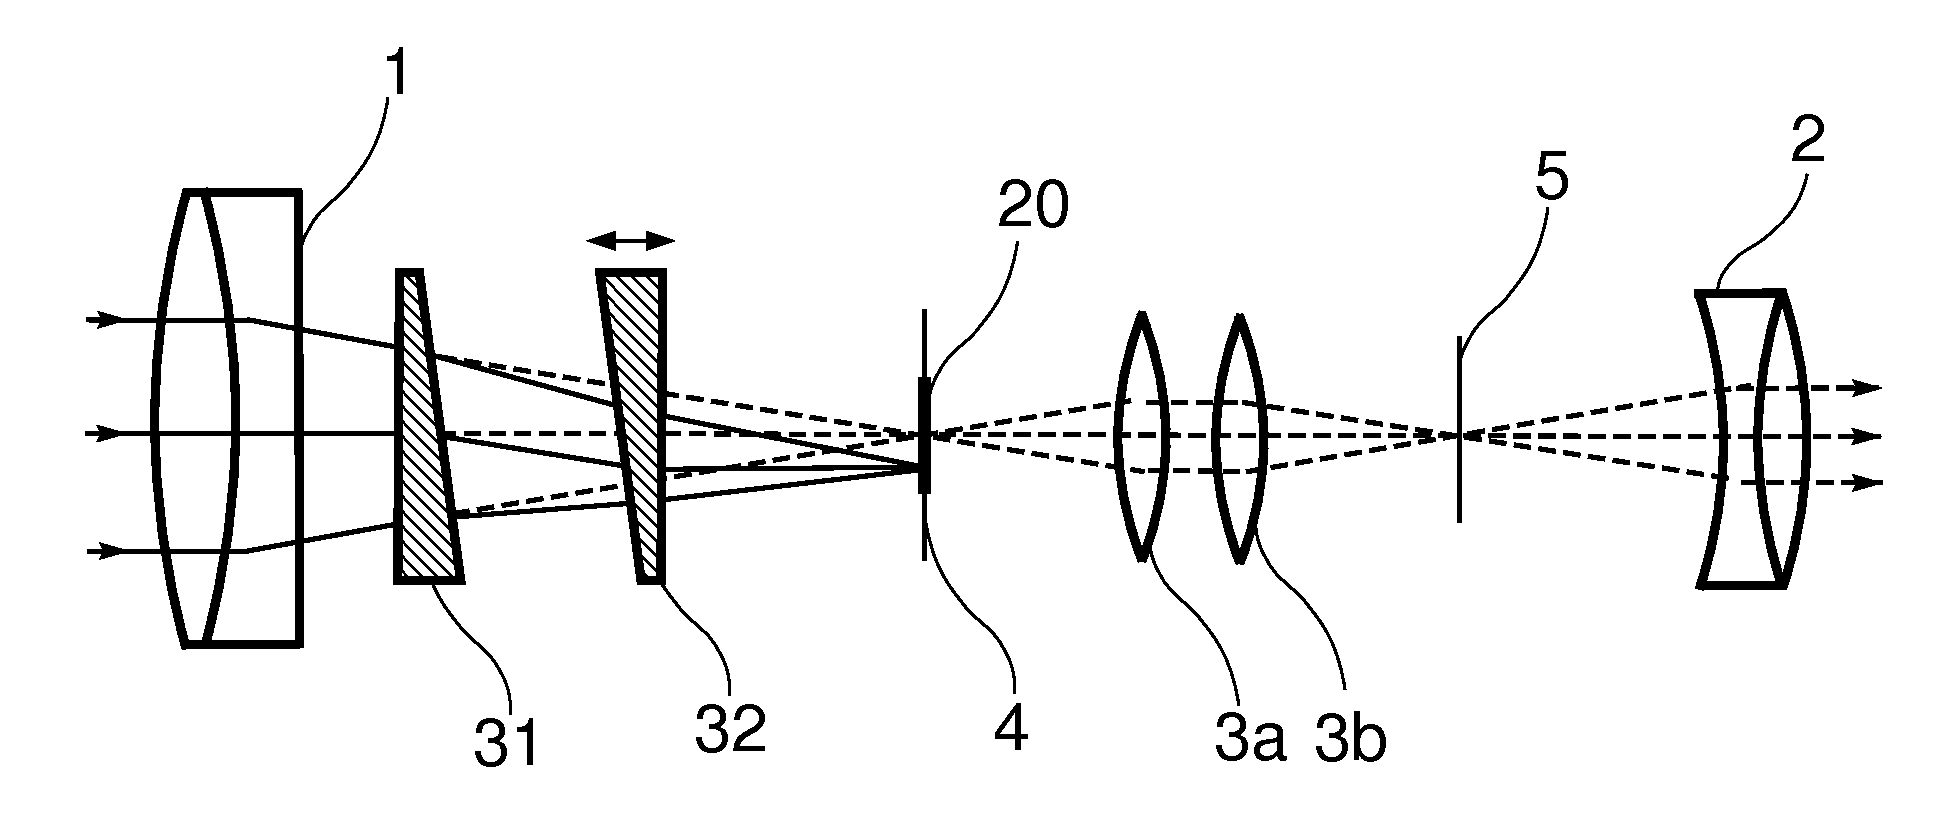 Telescopic gun sight with linear optical adjustment mechanism